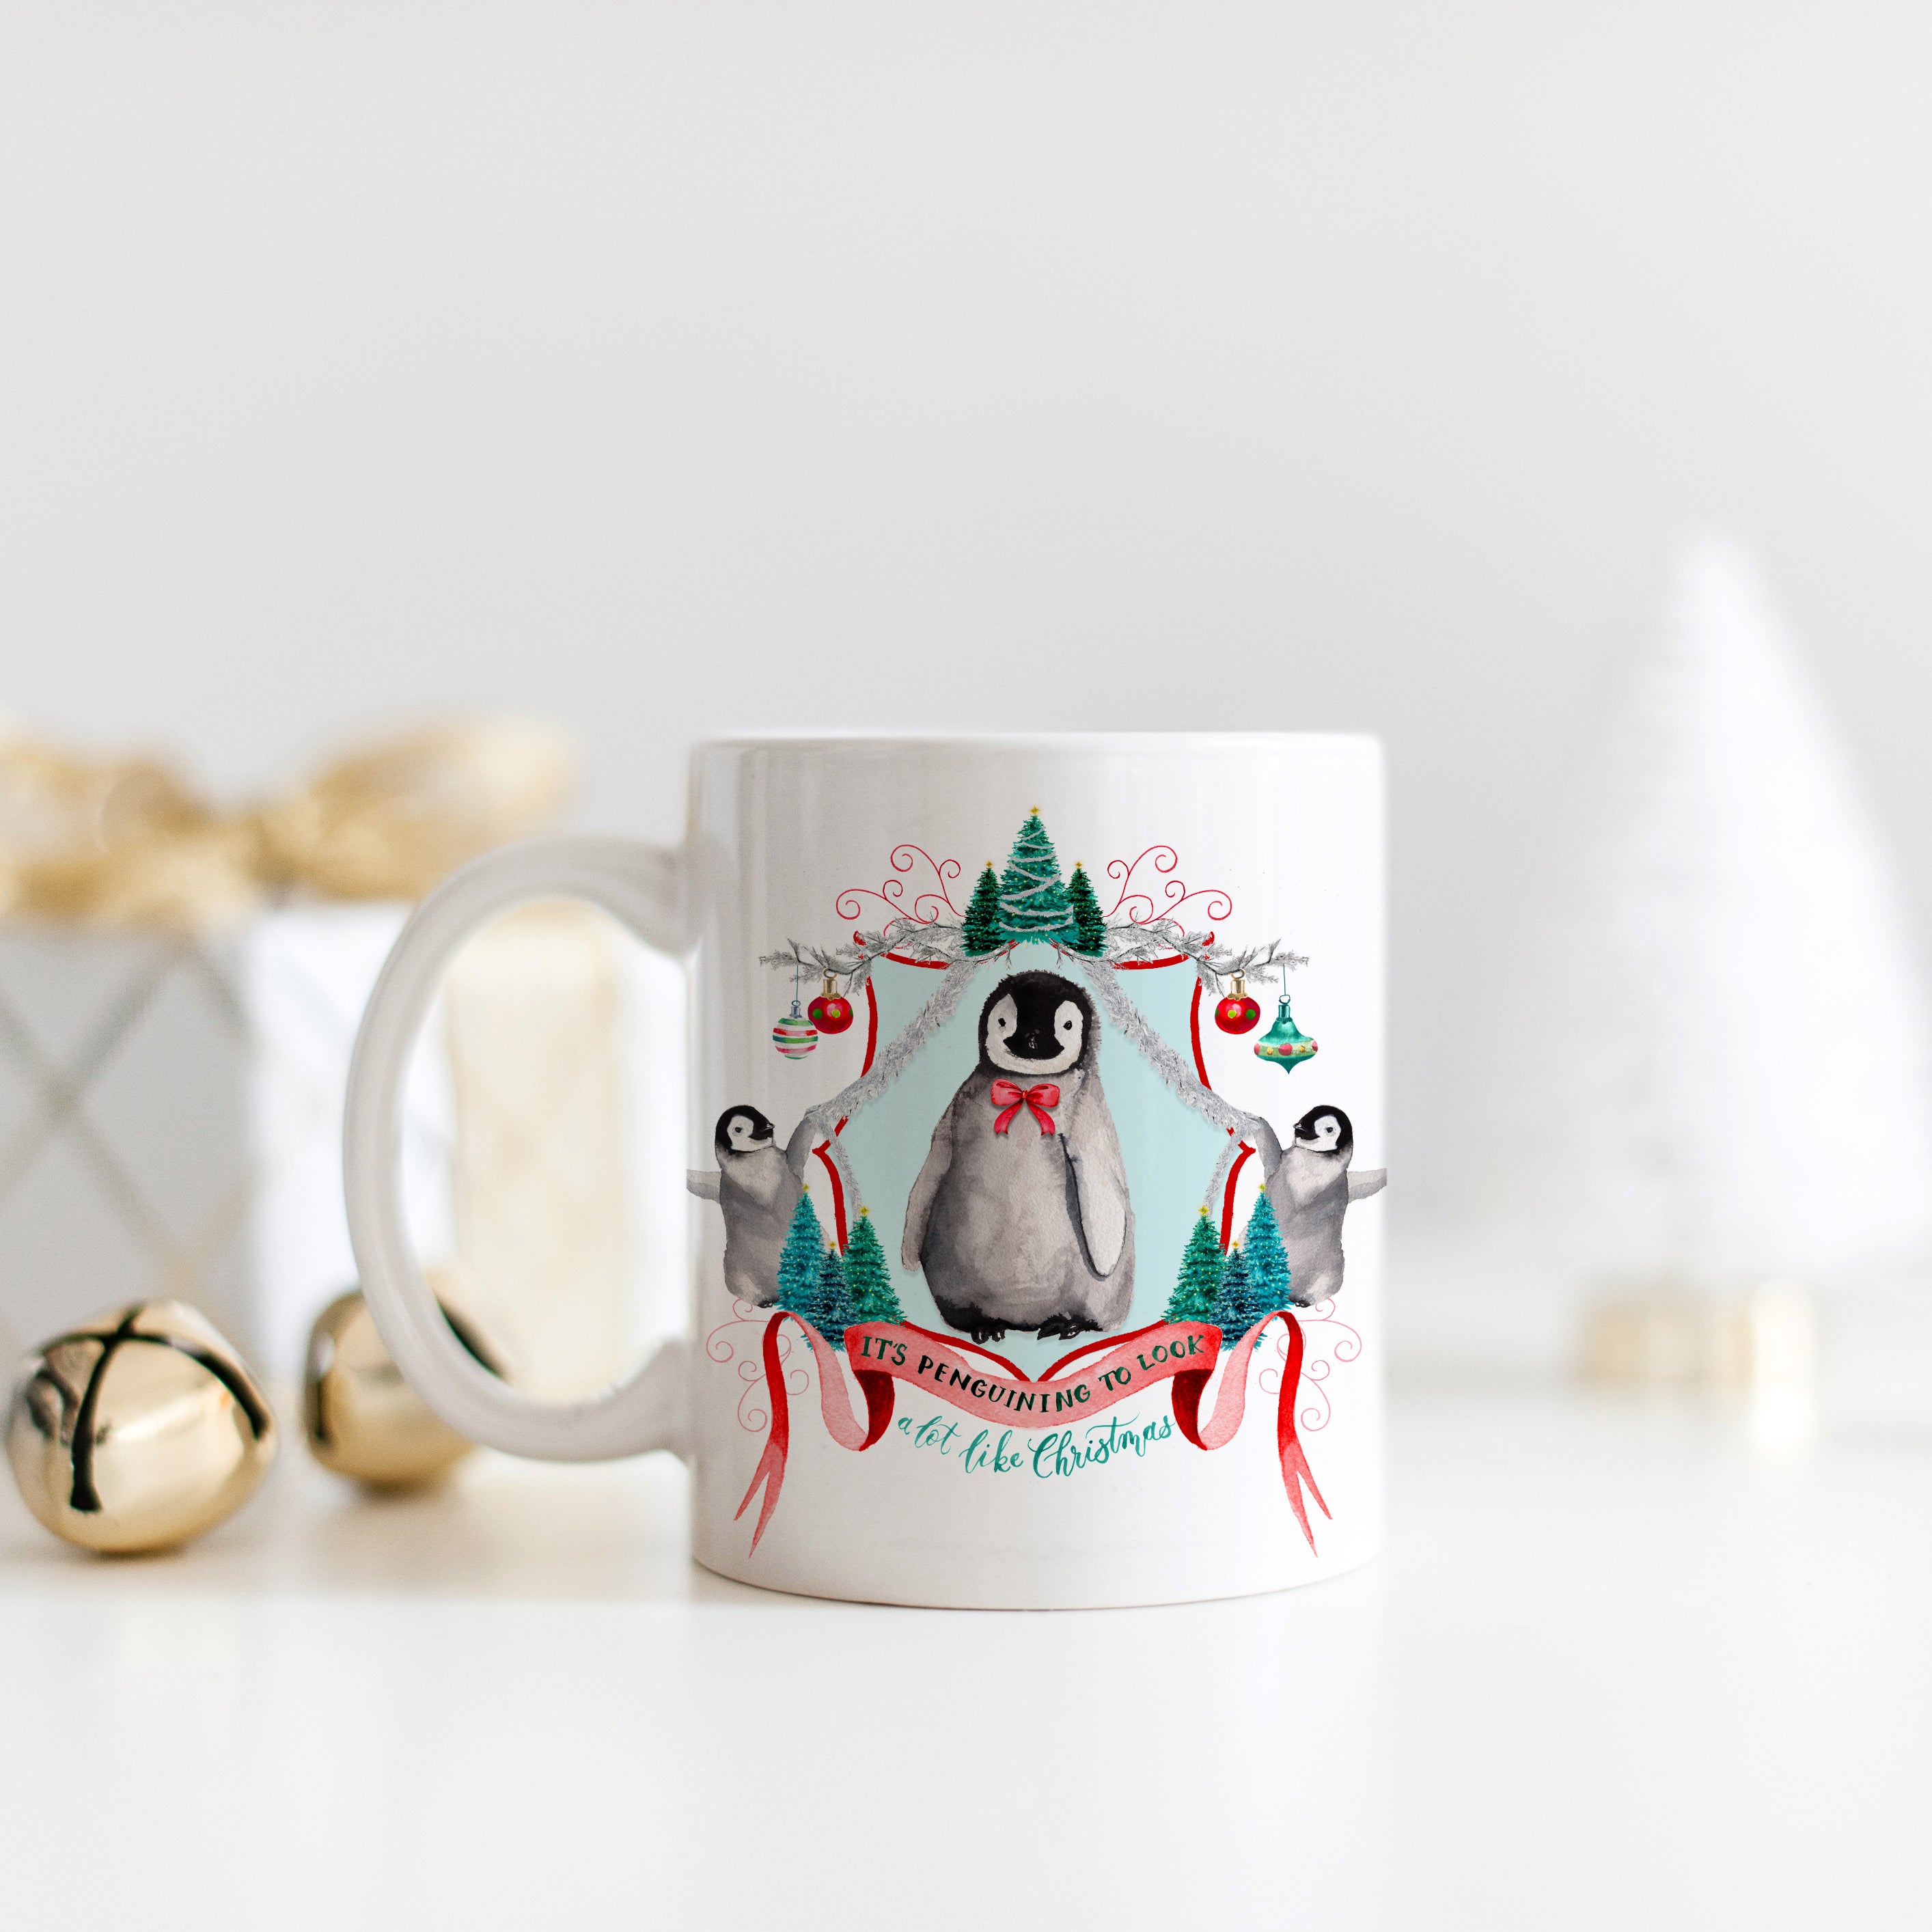 It's Penguining to Look a Lot Like Christmas Mug – Cami Monet